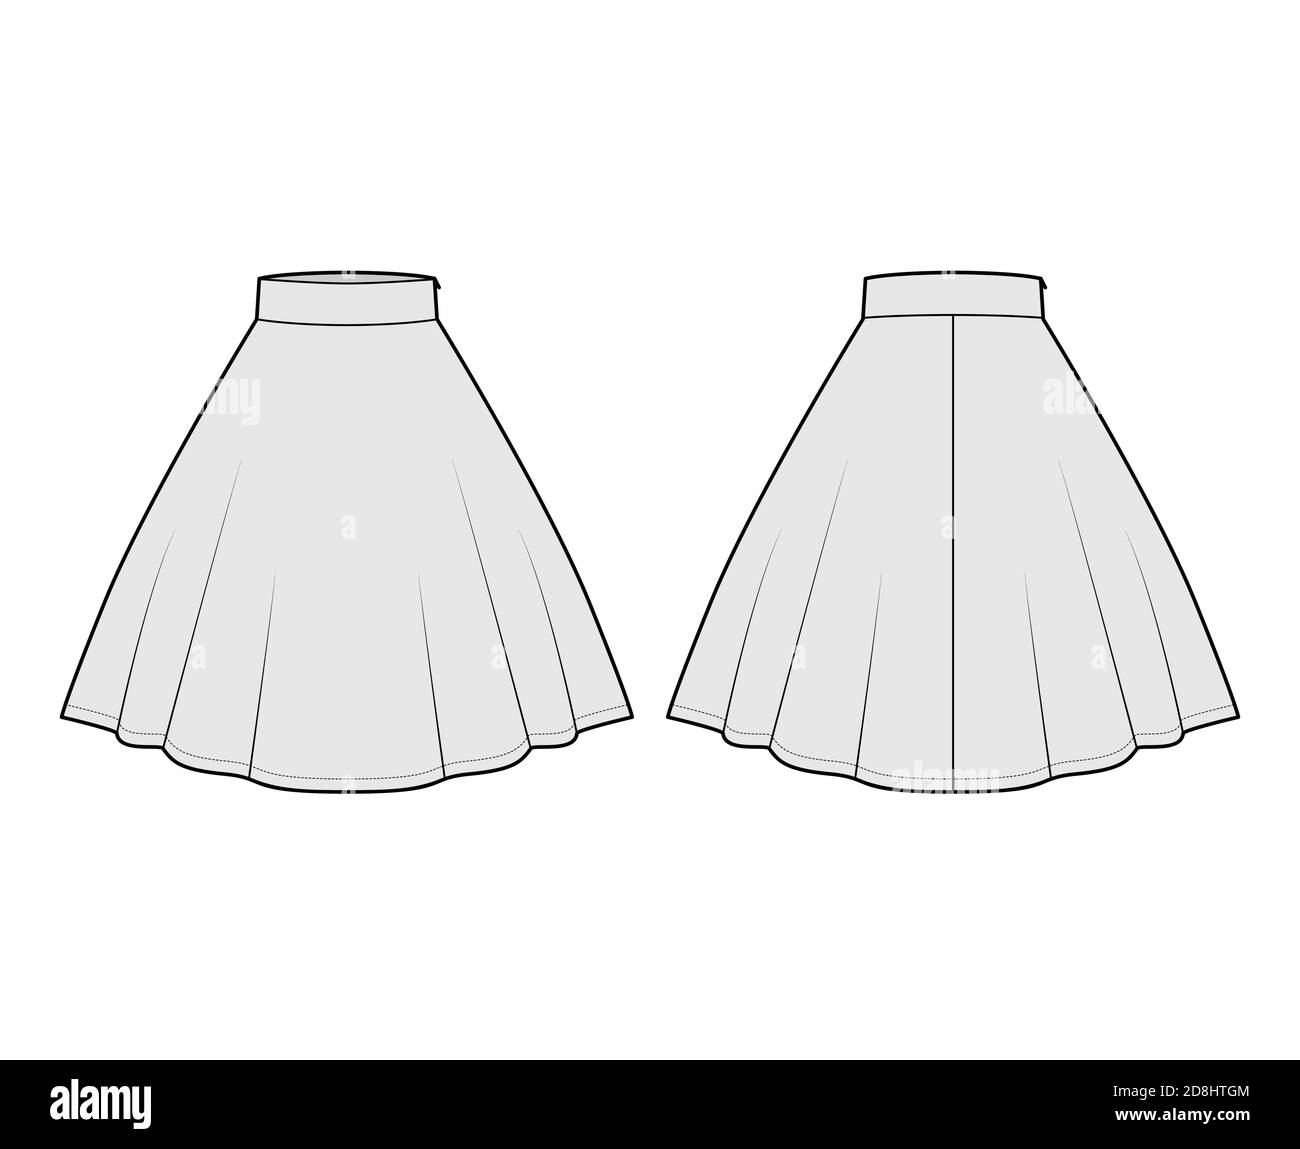 Skirt circular fullness technical fashion illustration with below-the ...